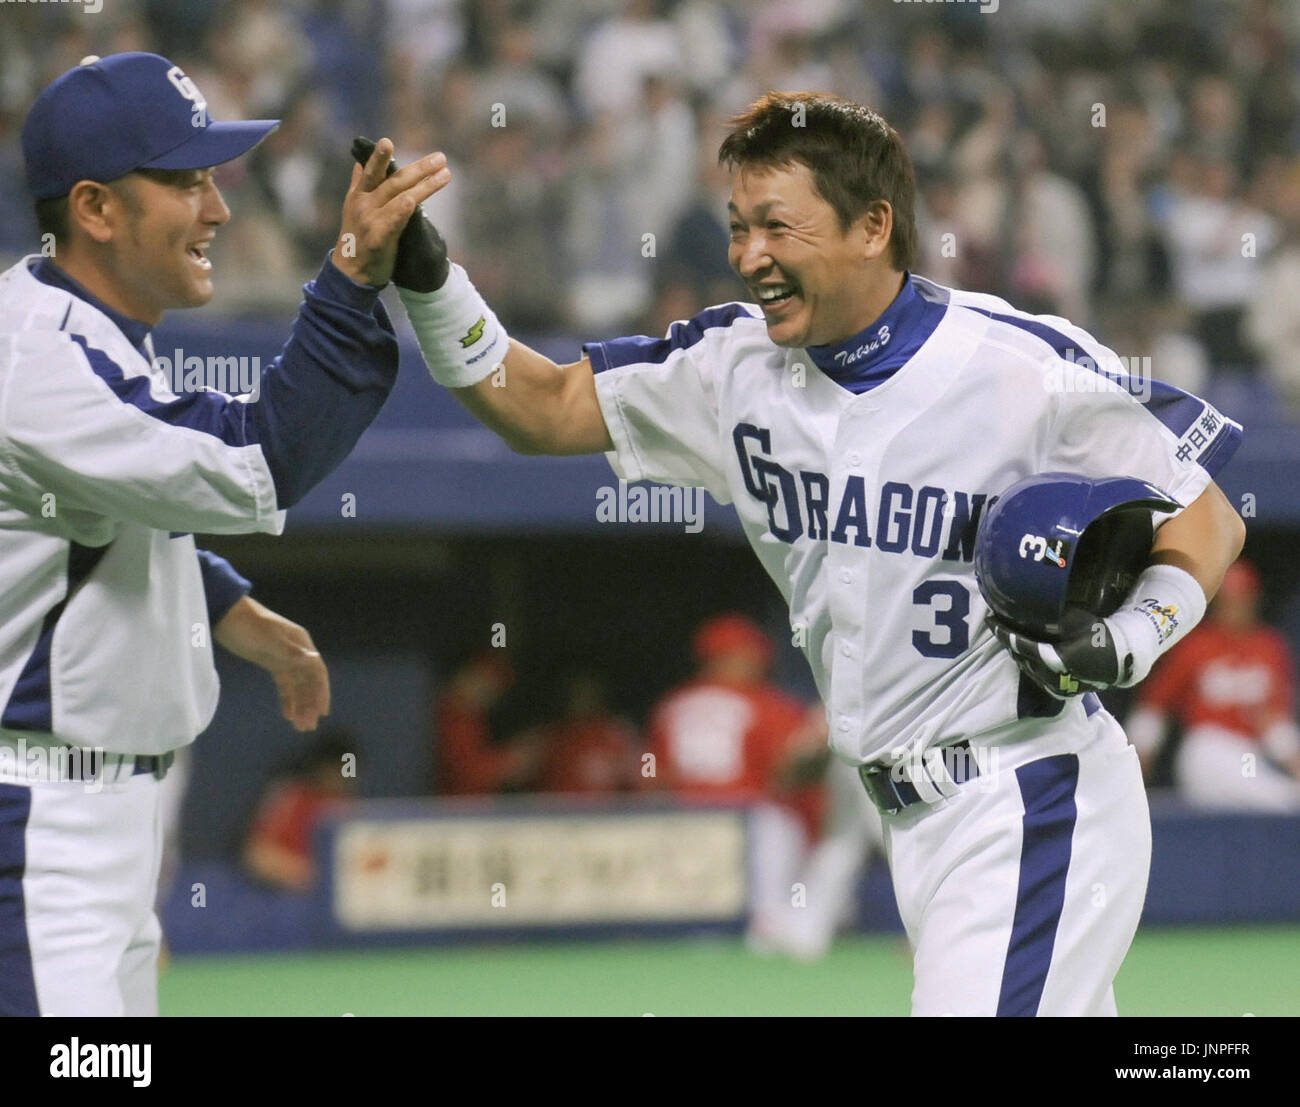 NAGOYA, Japan - Chunichi Dragons pinch hitter Kazuyoshi Tatsunami celebrates after singling in the game-winning run to beat the Hiroshima Carp 4-3 at Nagoya Dome on May 7